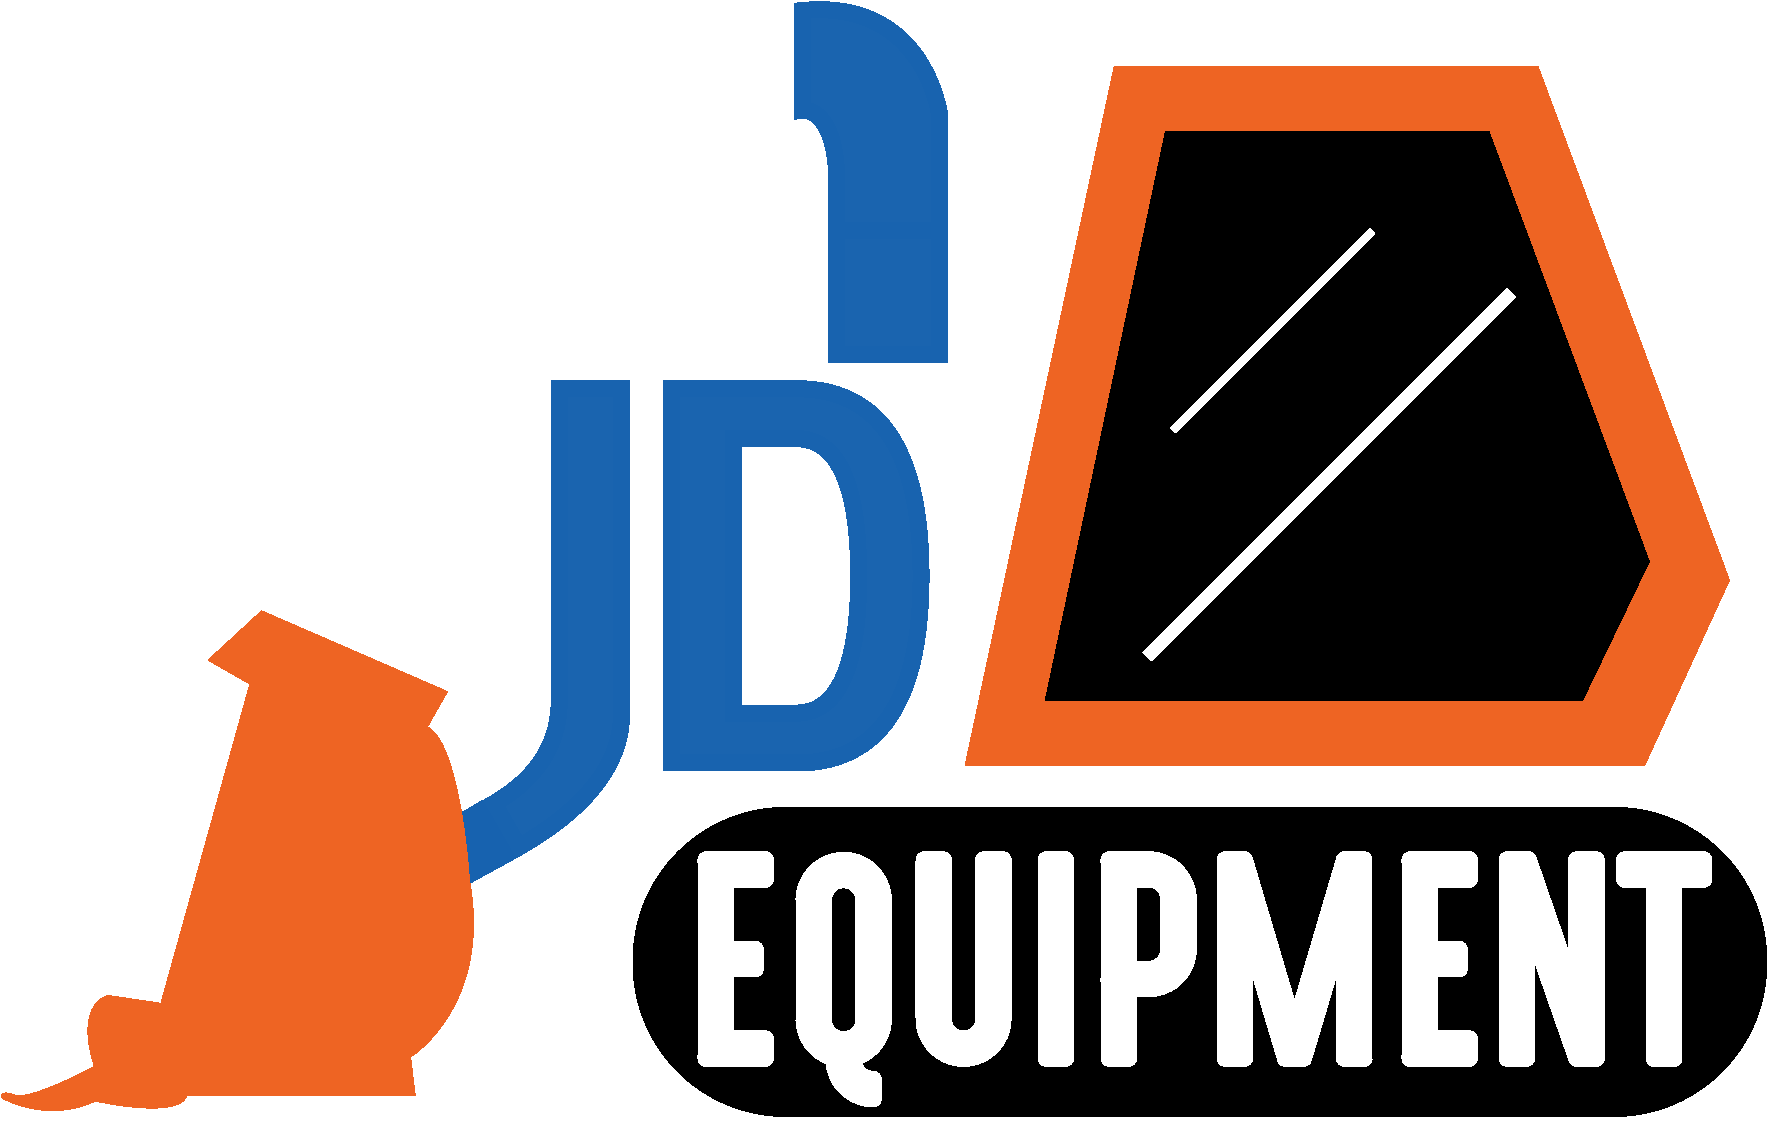 Jd Equipment - Heavy Equipment (1784x1219)